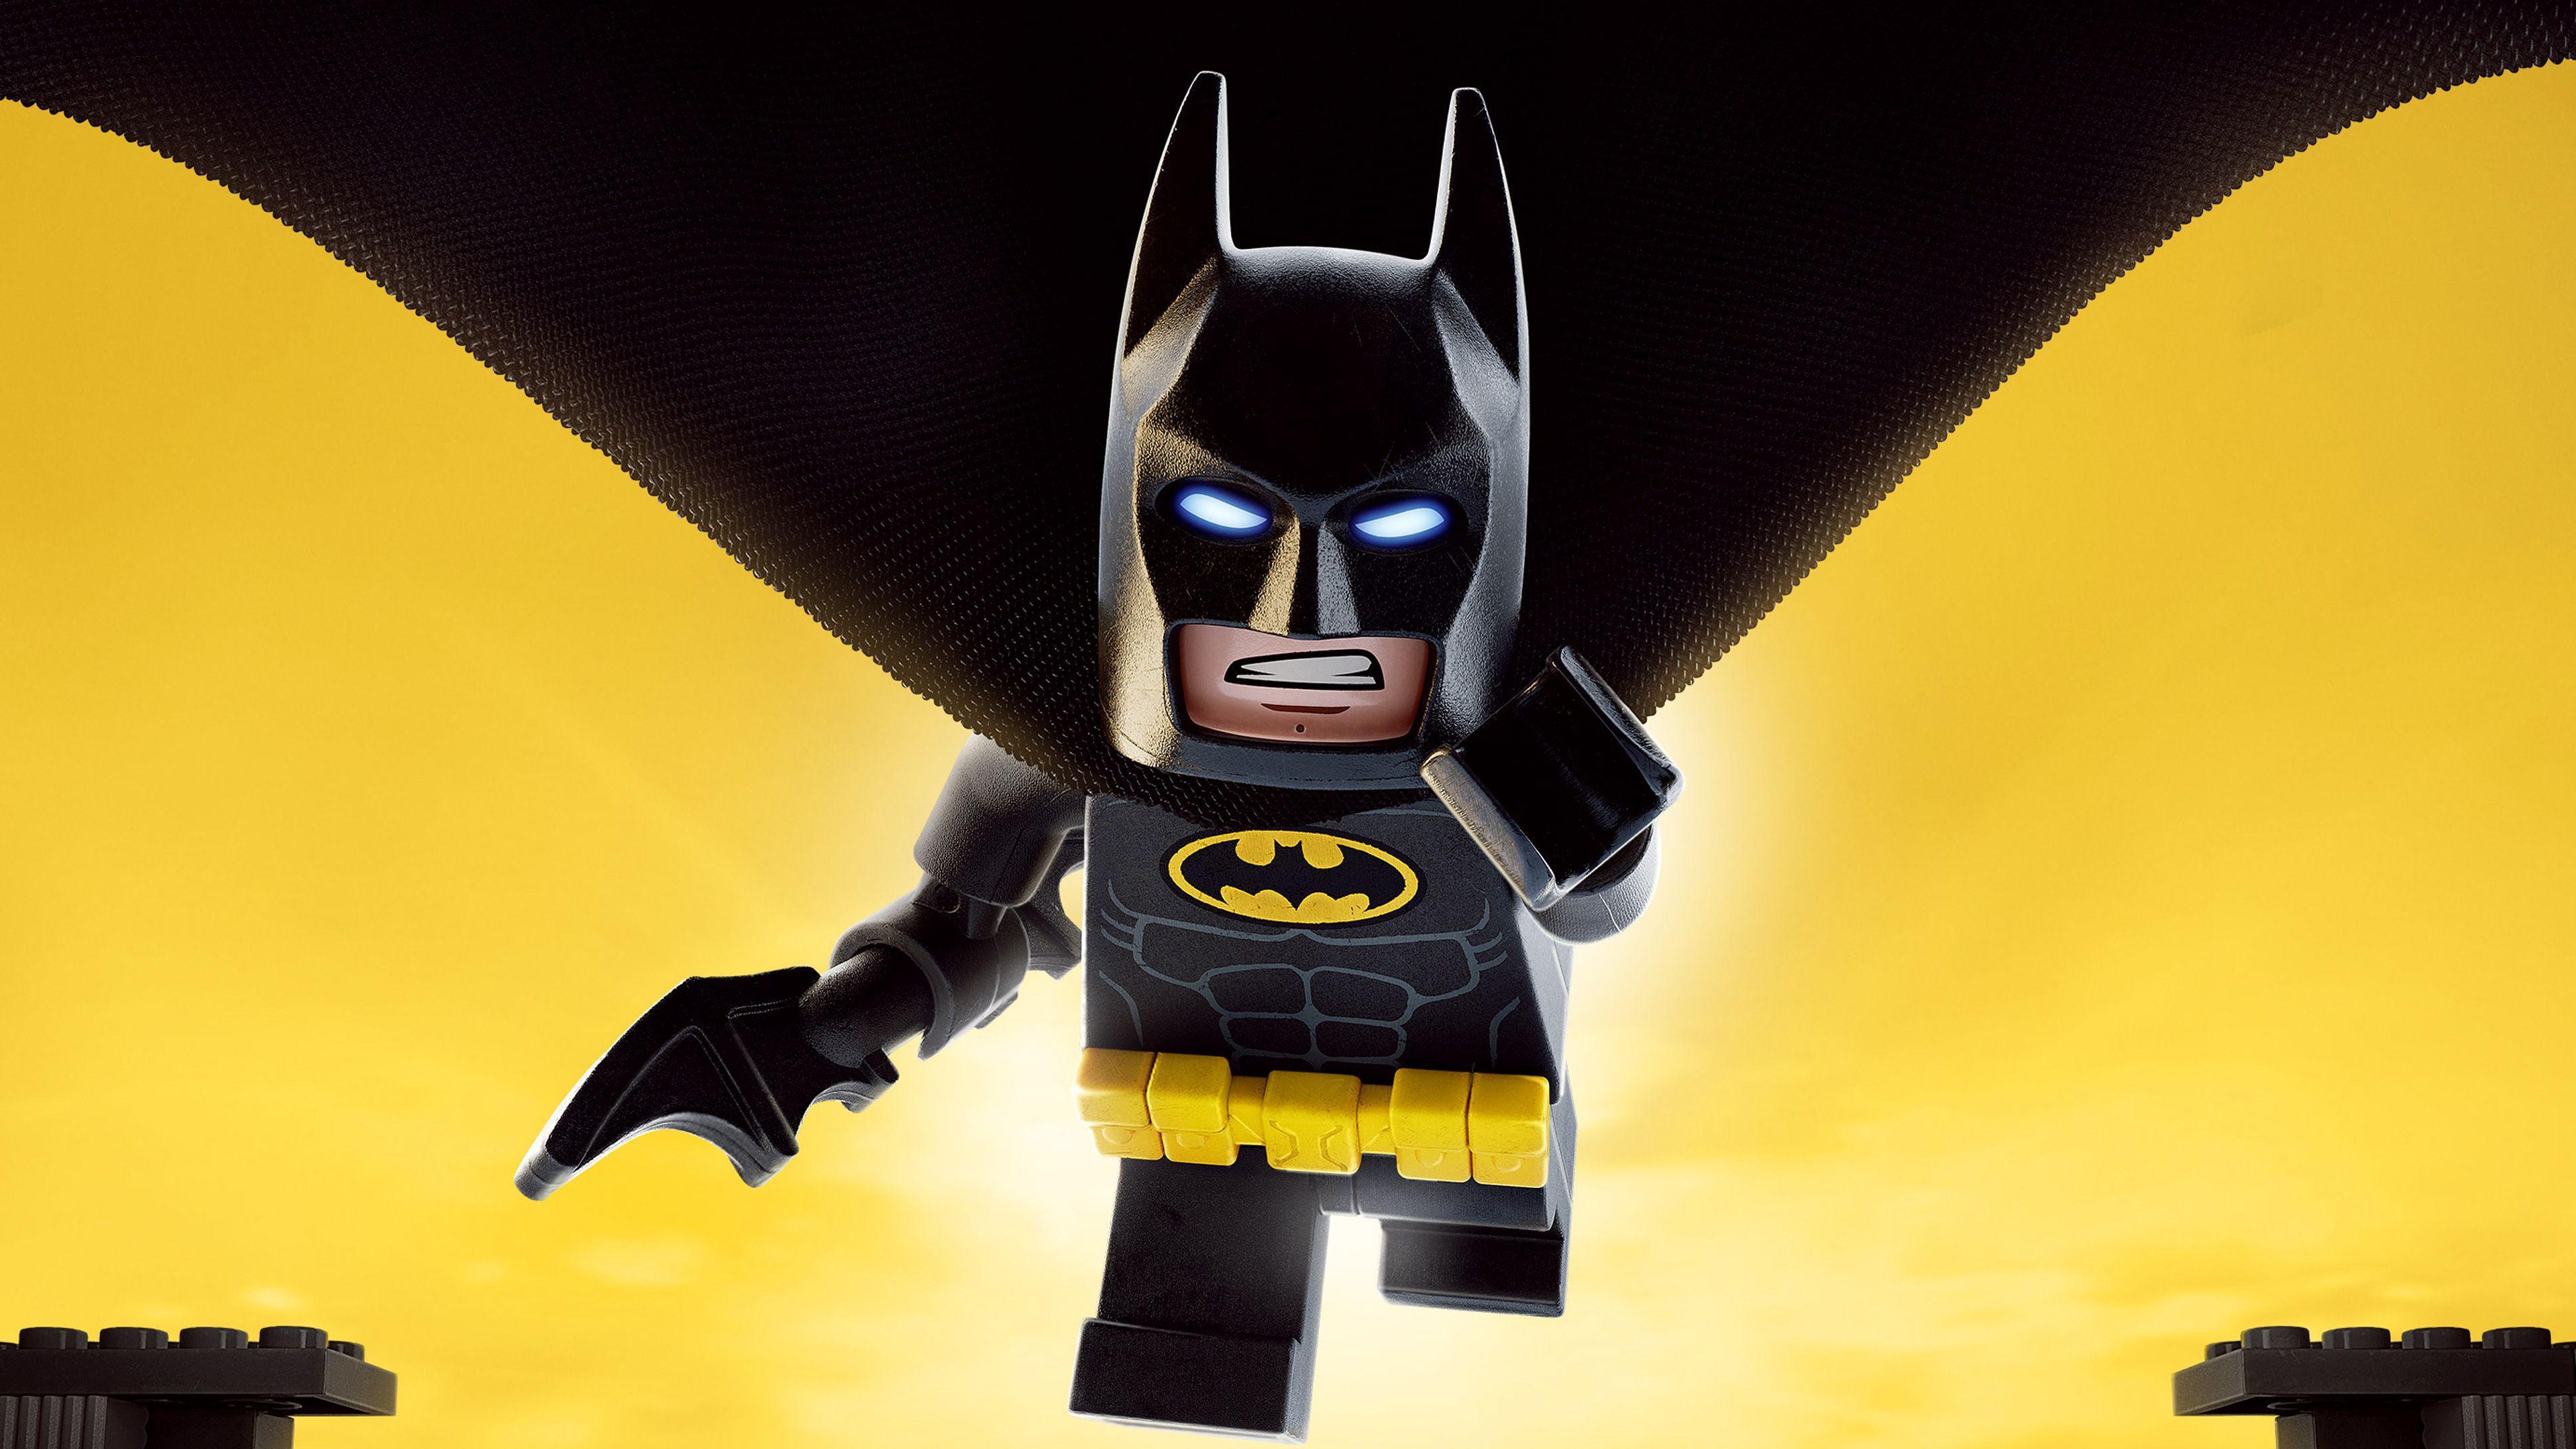 Wallpaper The Lego Batman Movie, LEGO Batman, LEGO Superman, 2017